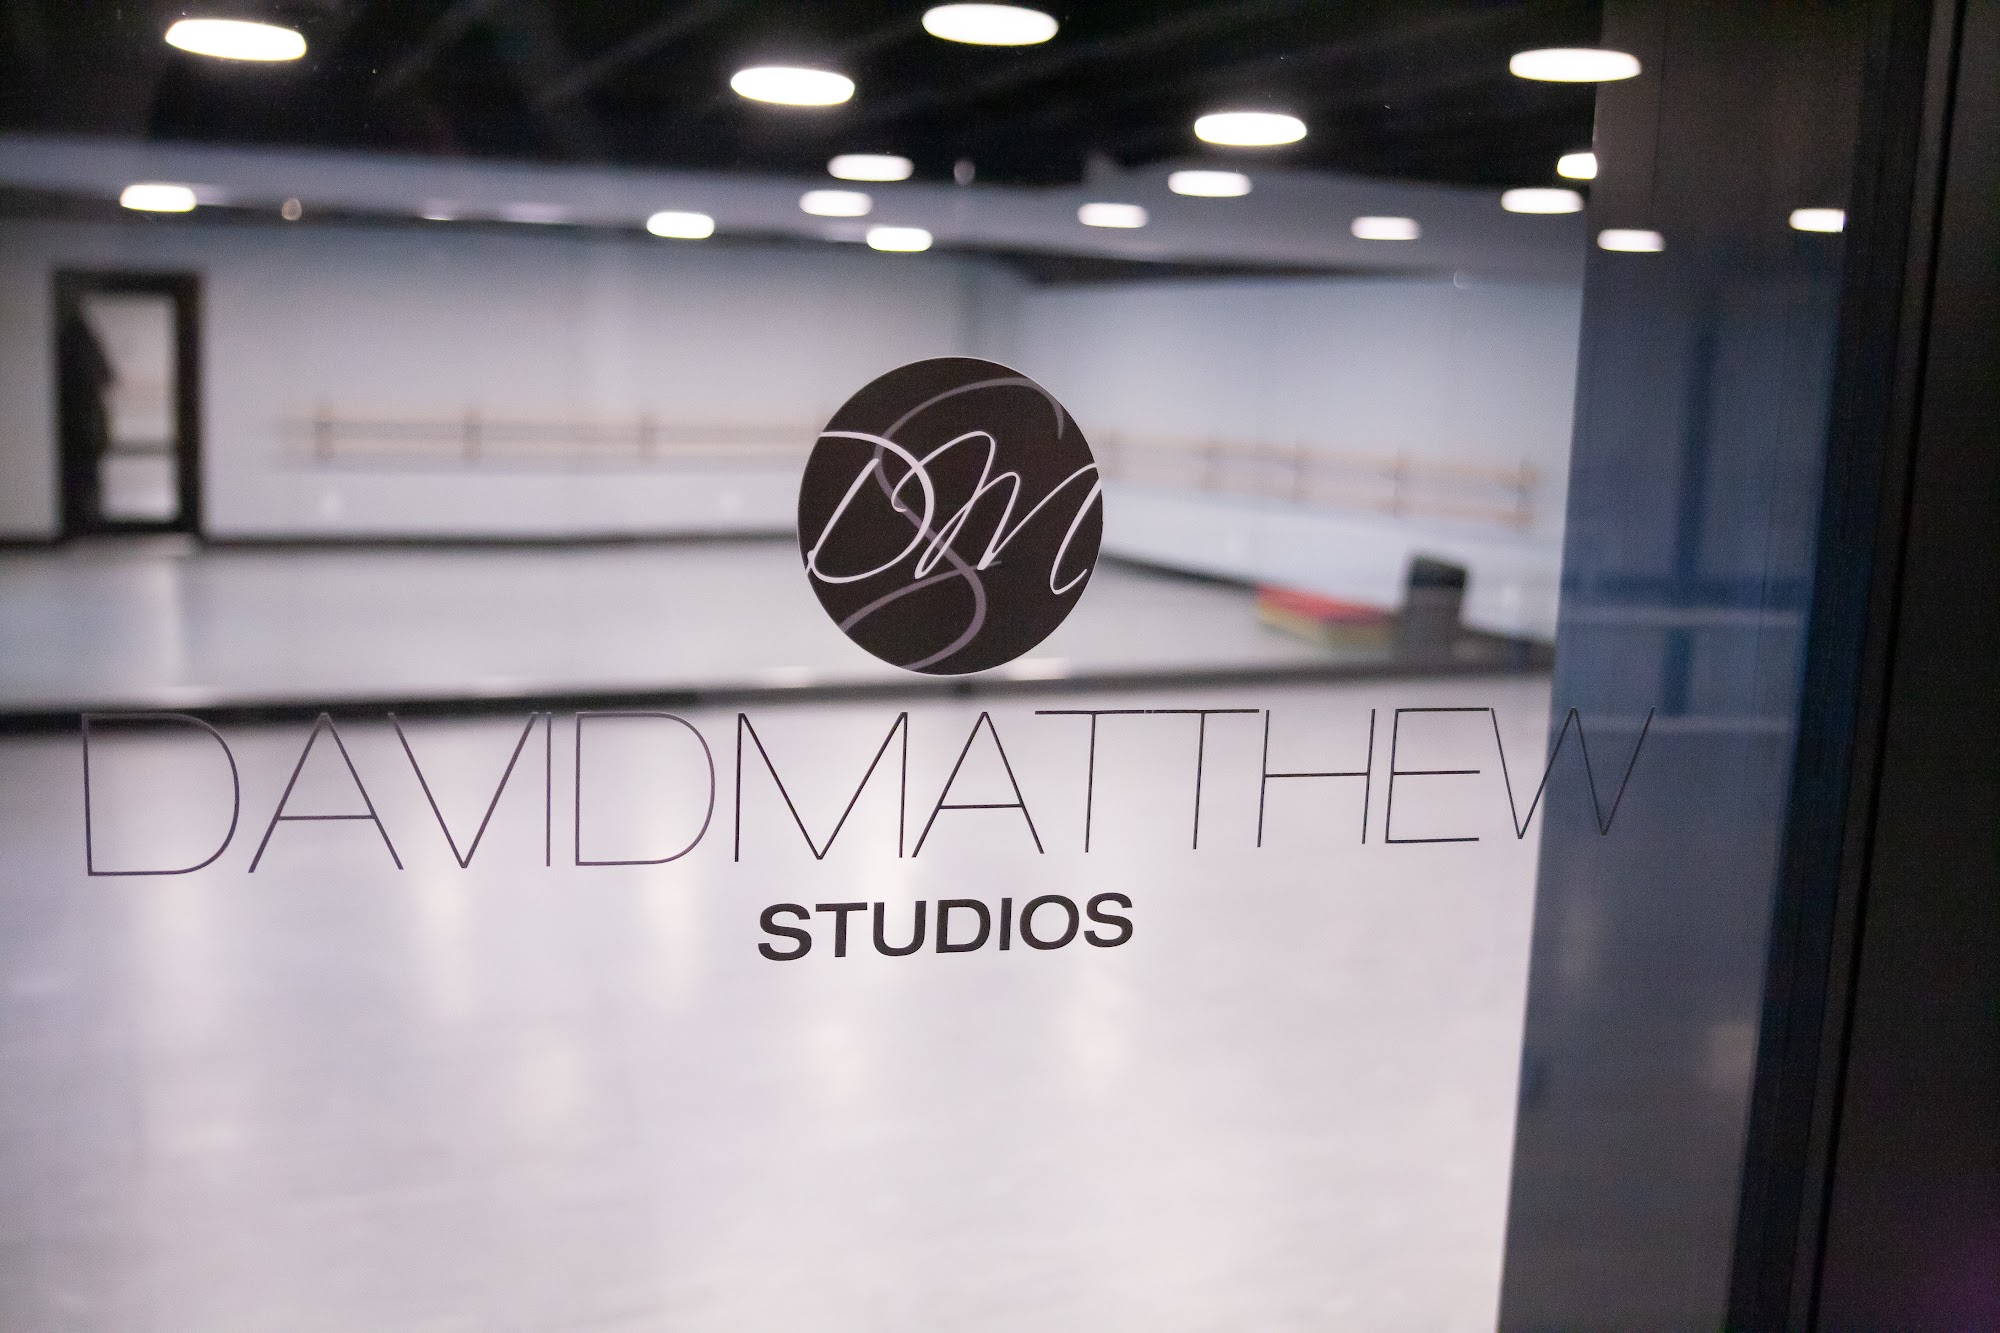 David Matthew Studios 495 Pettis Ave SE suite 473 & 469, Ada Michigan 49301